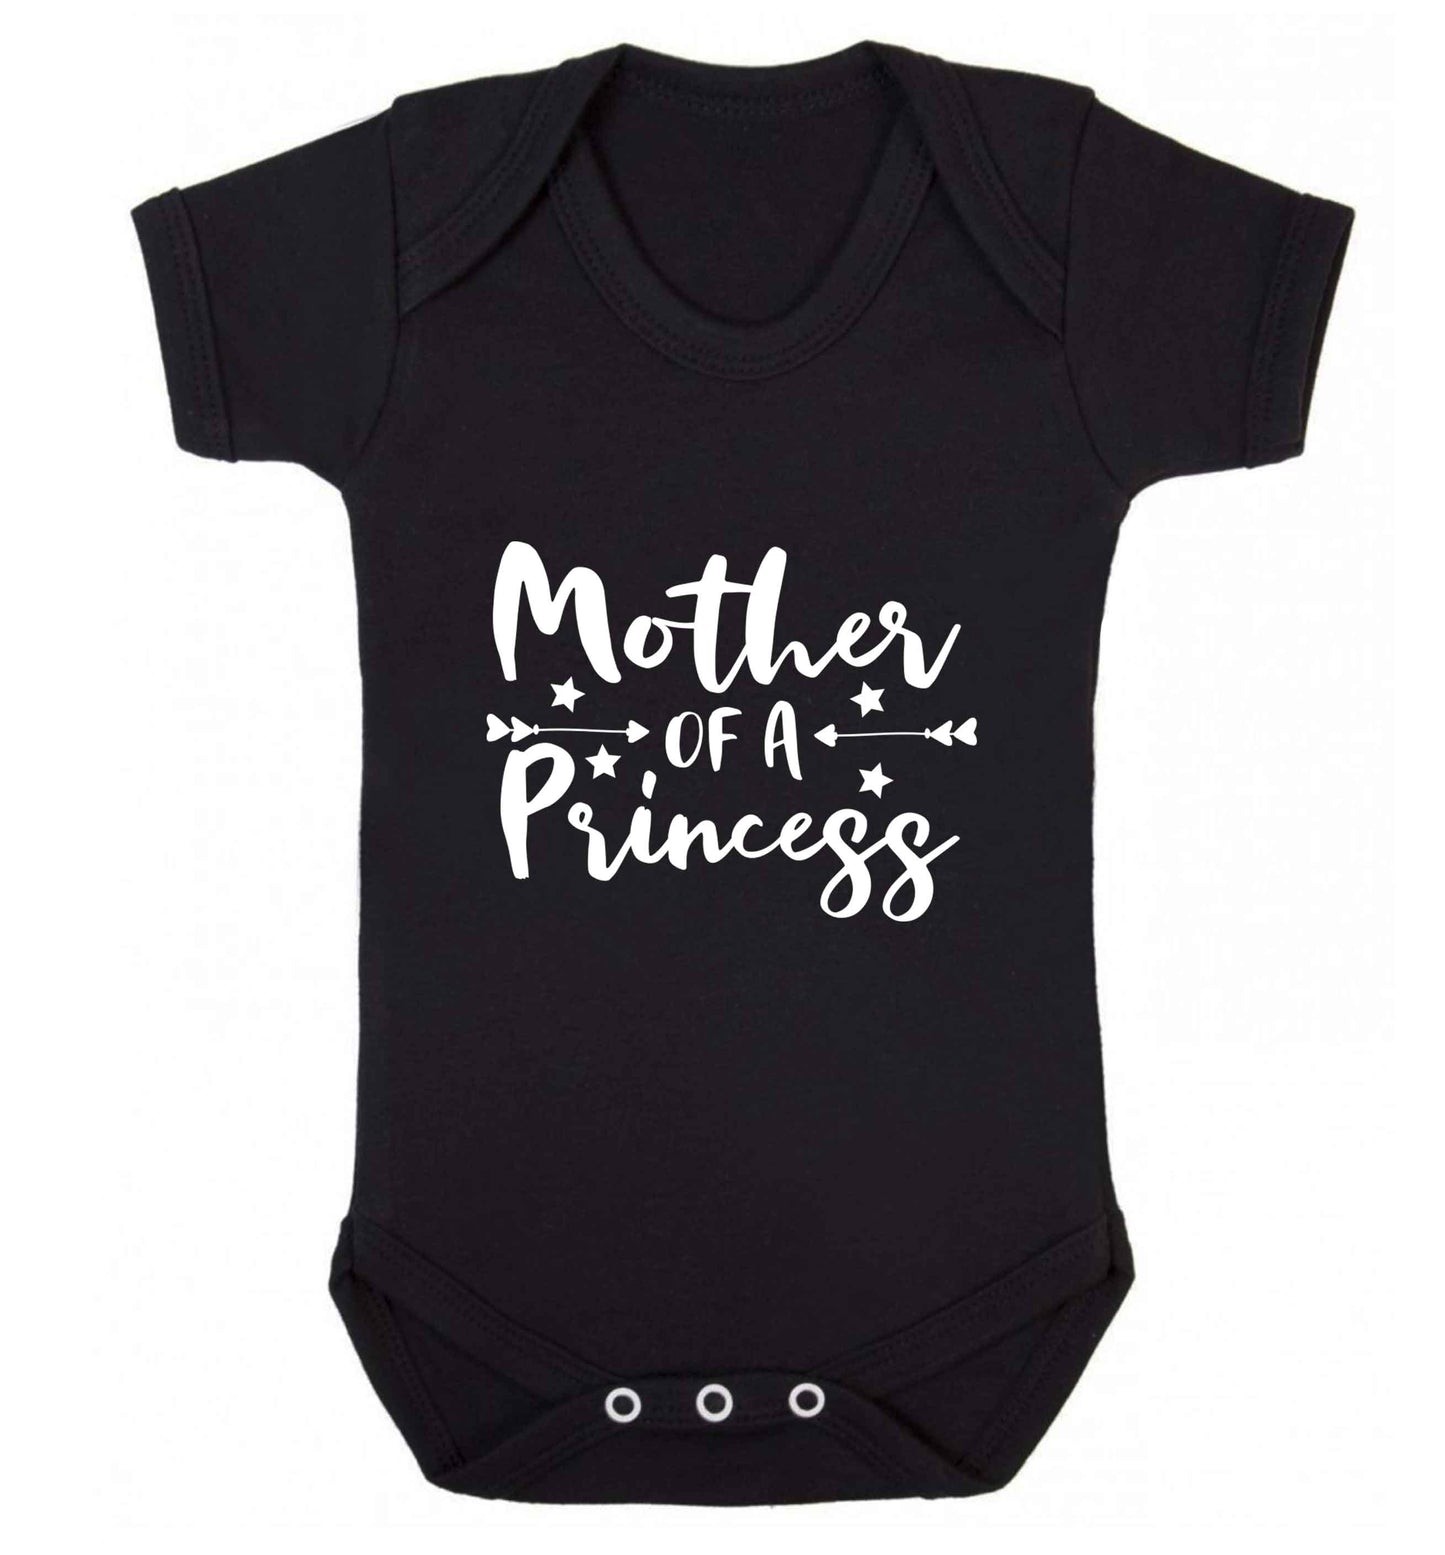 Mother of a princess baby vest black 18-24 months